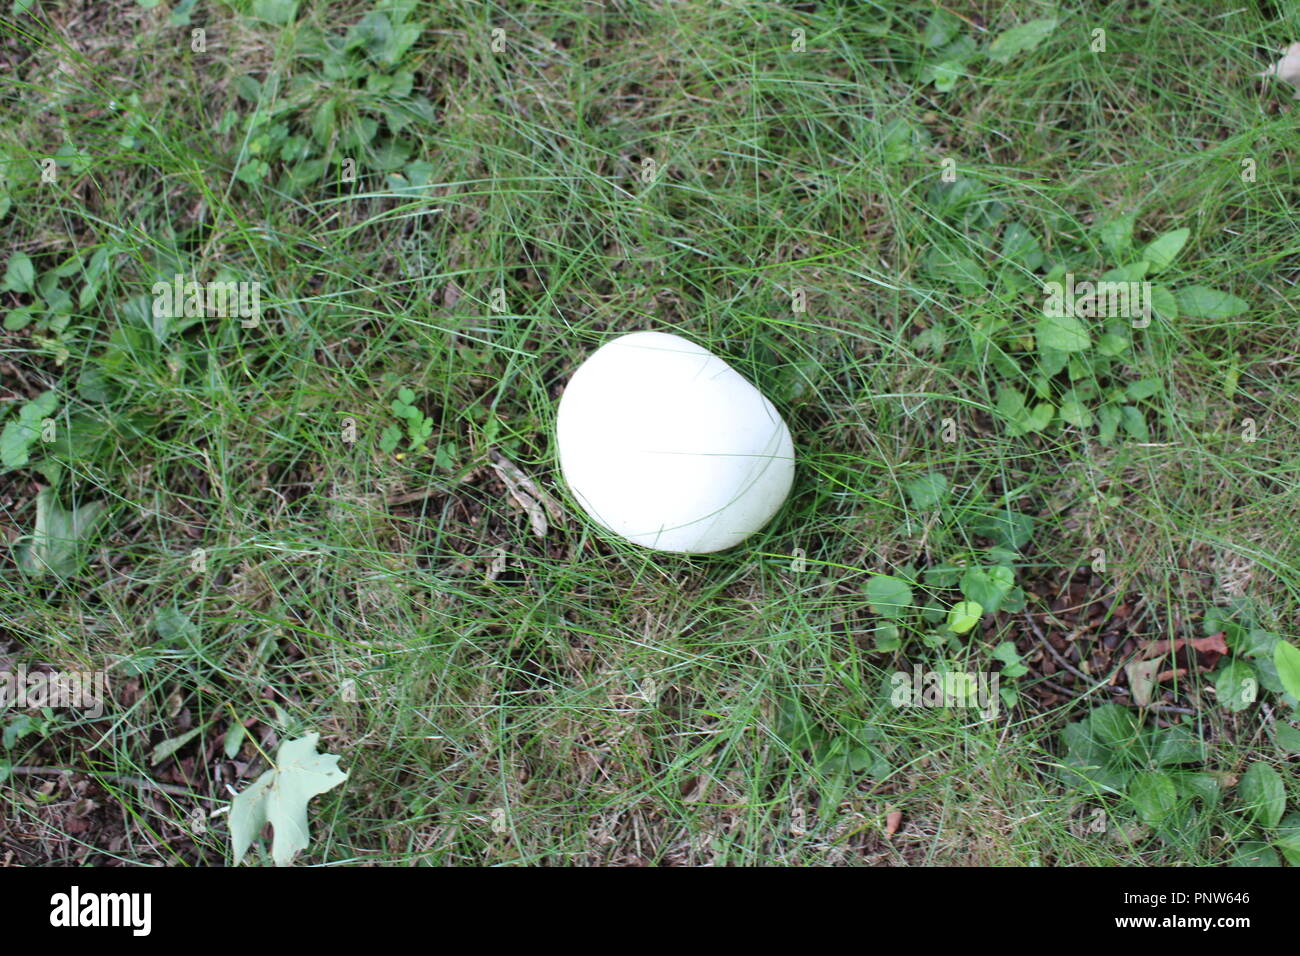 Giant Puffball Mushroom found in open grassy field Stock Photo